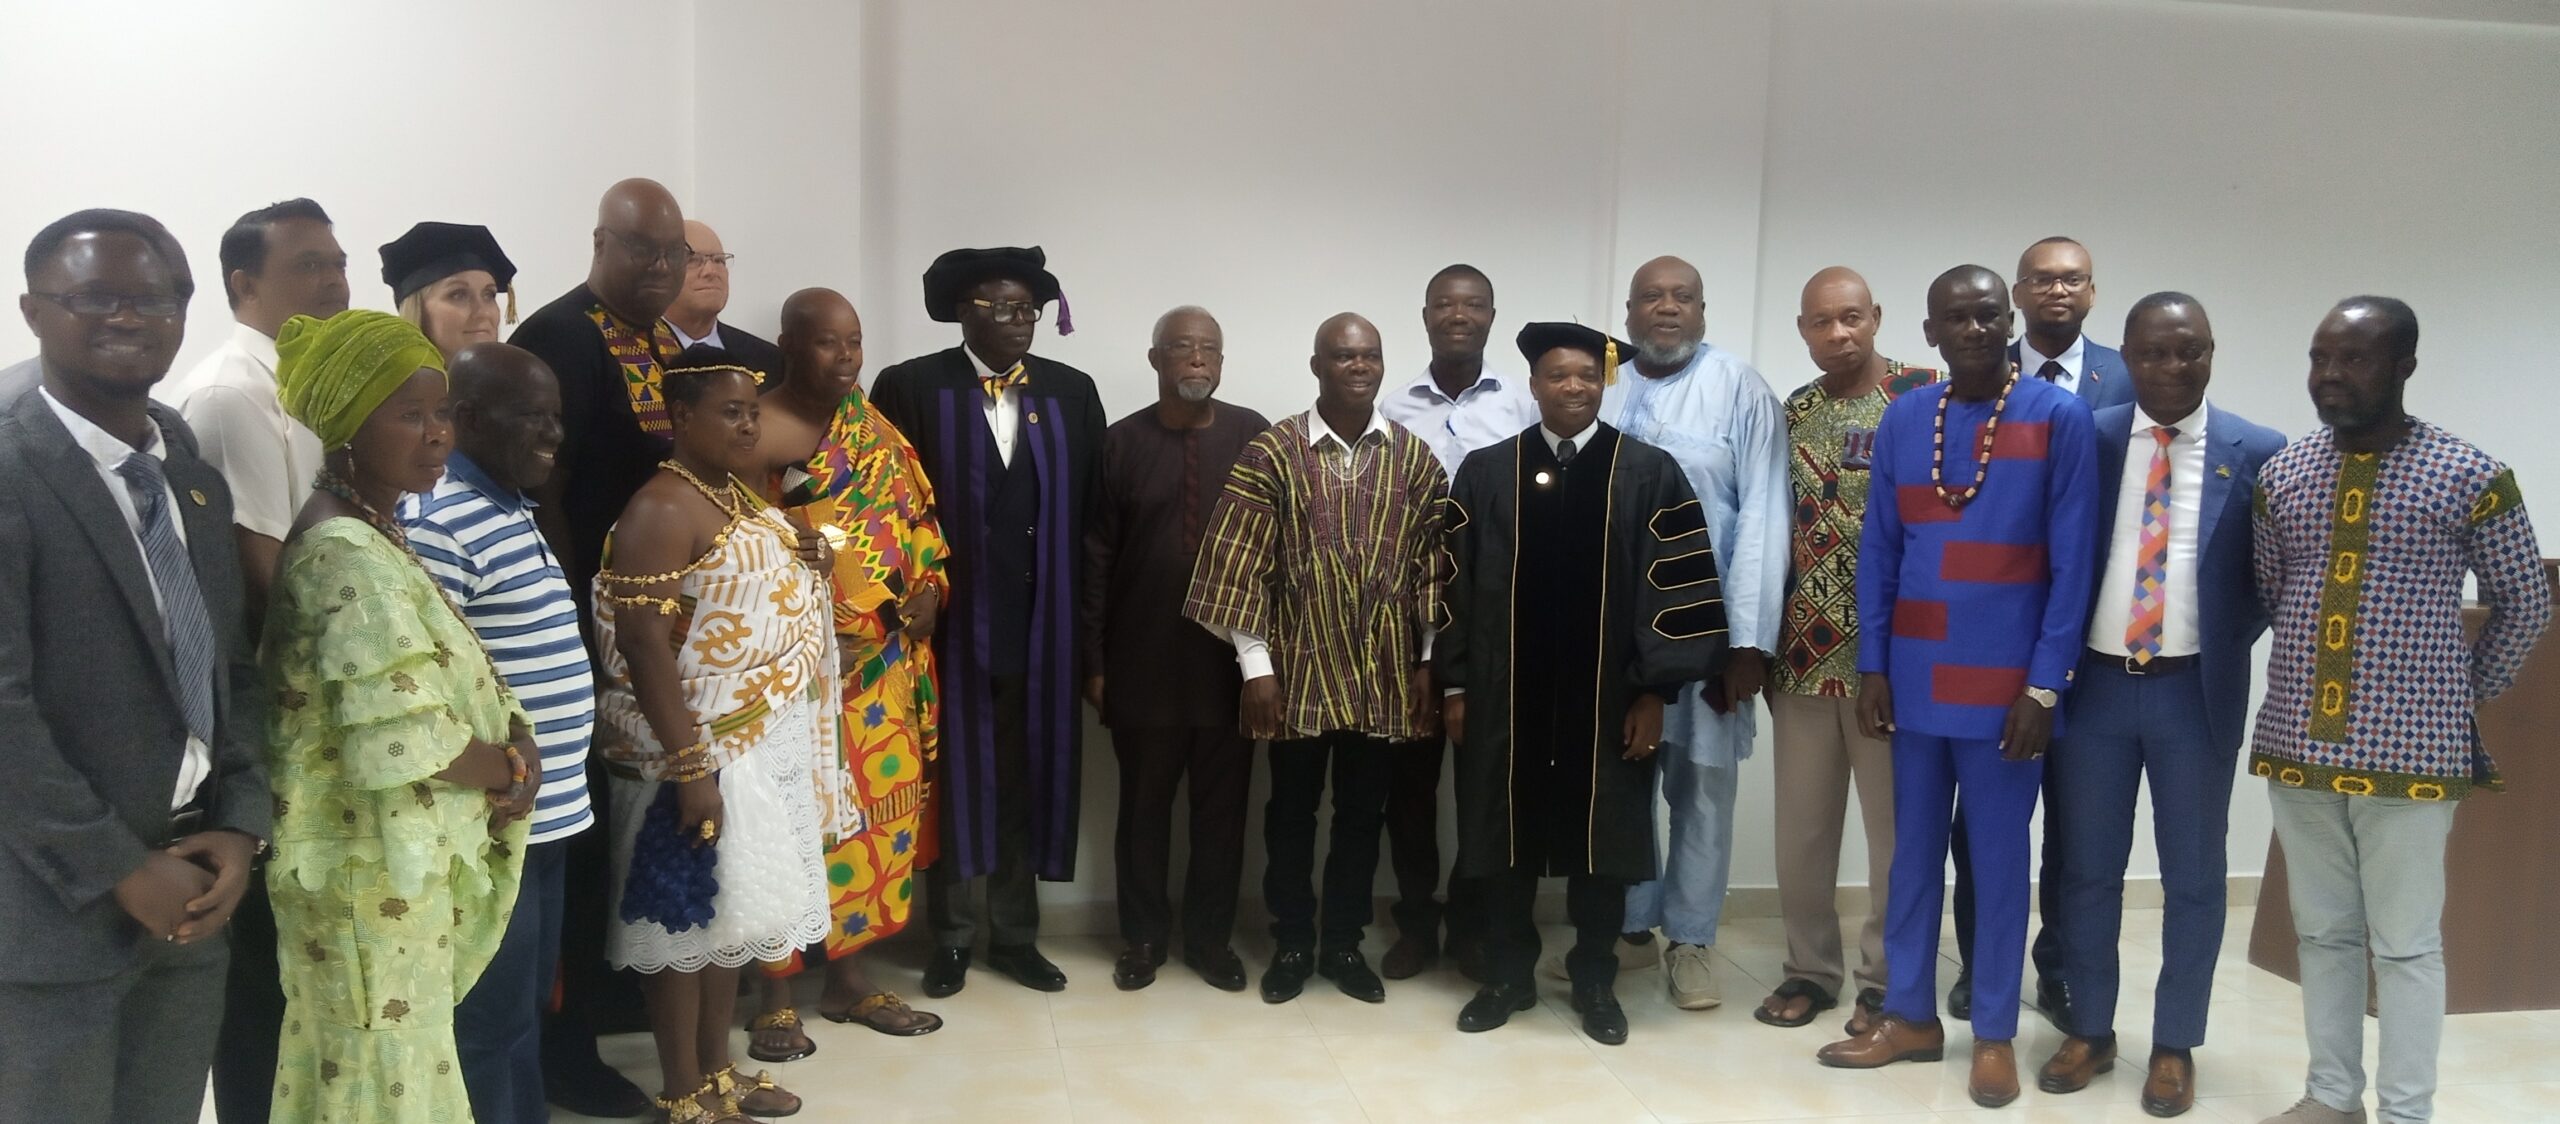 UGCSI Honours Okatakyi Asafo Boakye III with Doctorate in Leadership and Humanity